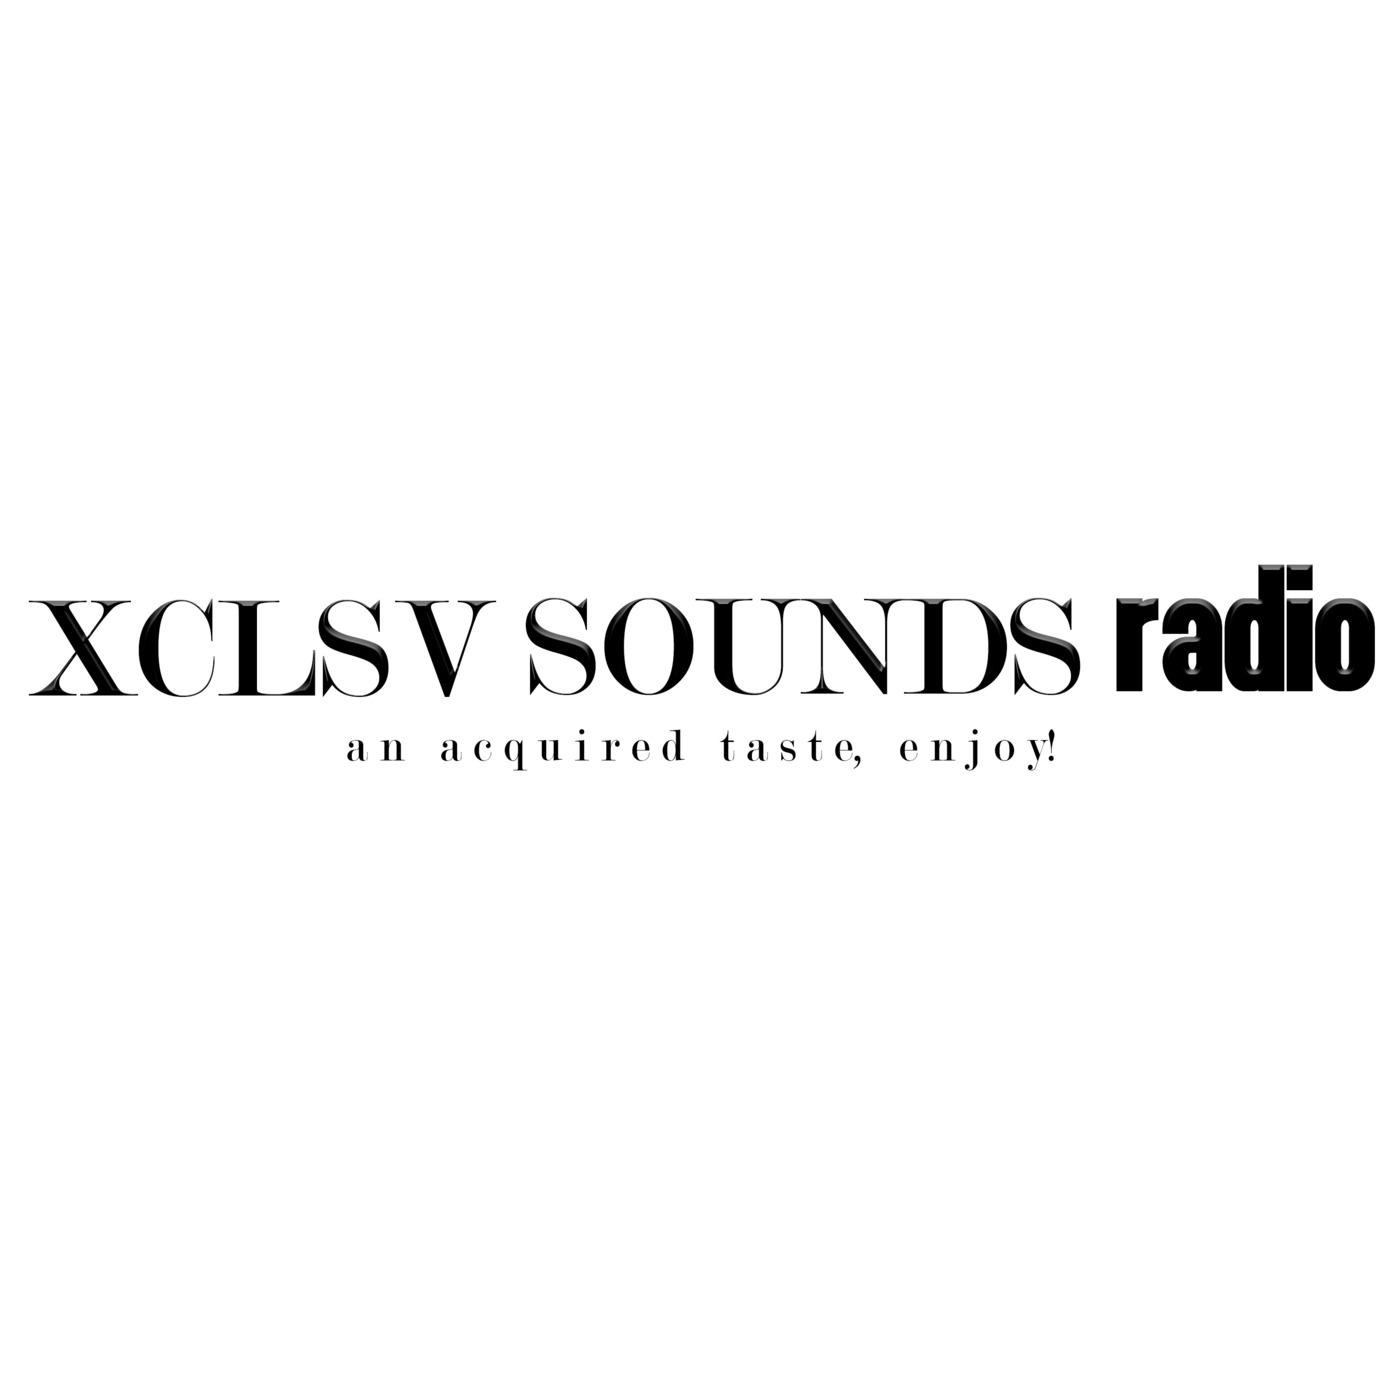 XCL$V SOUNDS RADIO